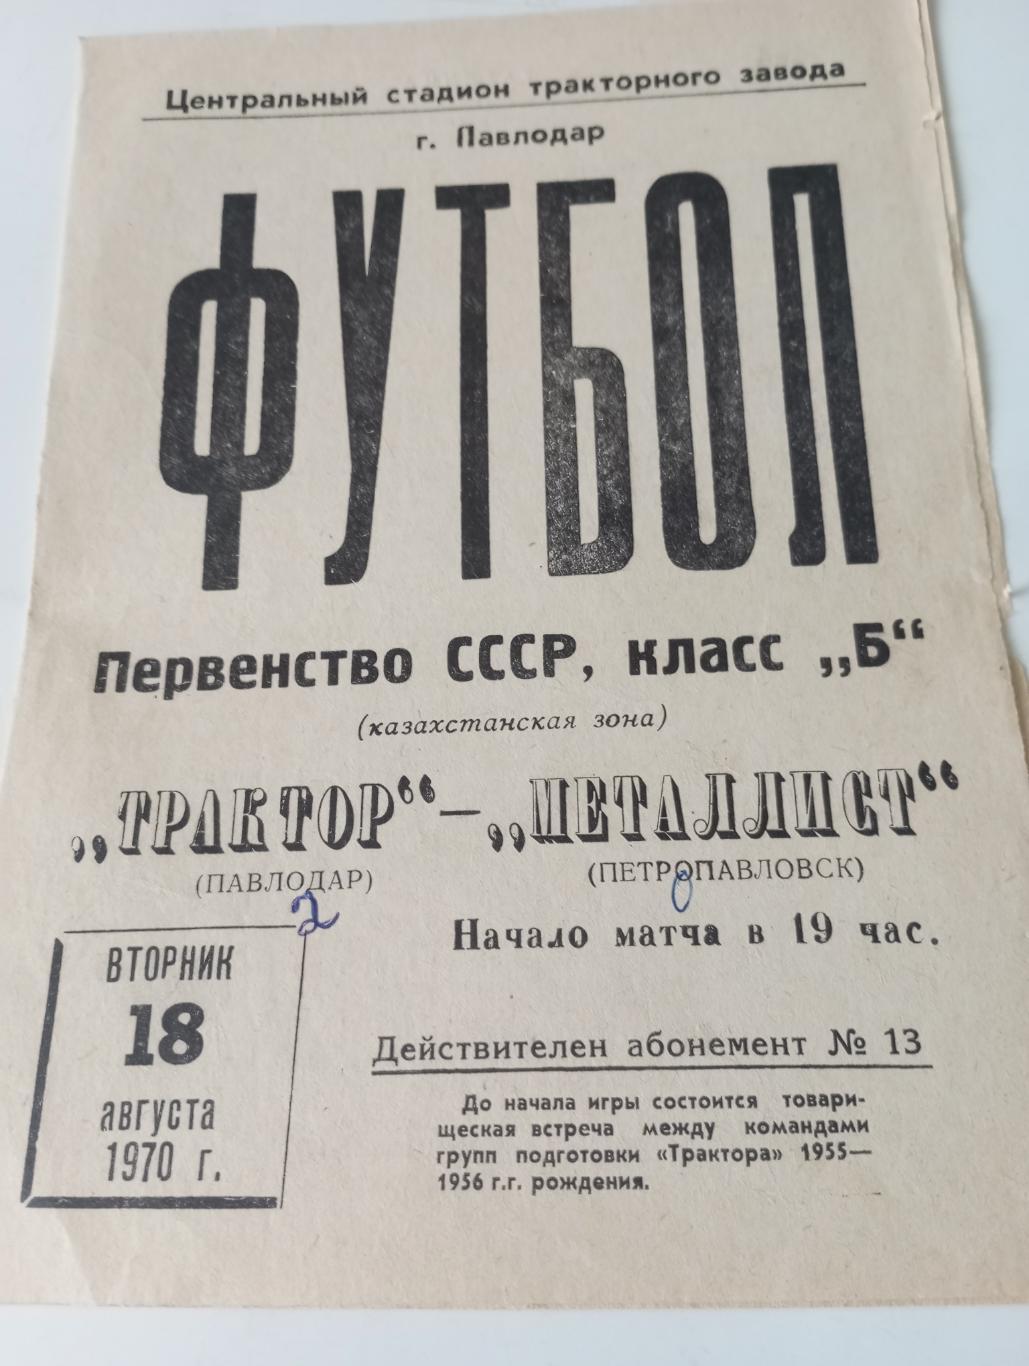 Трактор (Павлодар) - Металлист (Петропавловск) 18.08.1970.